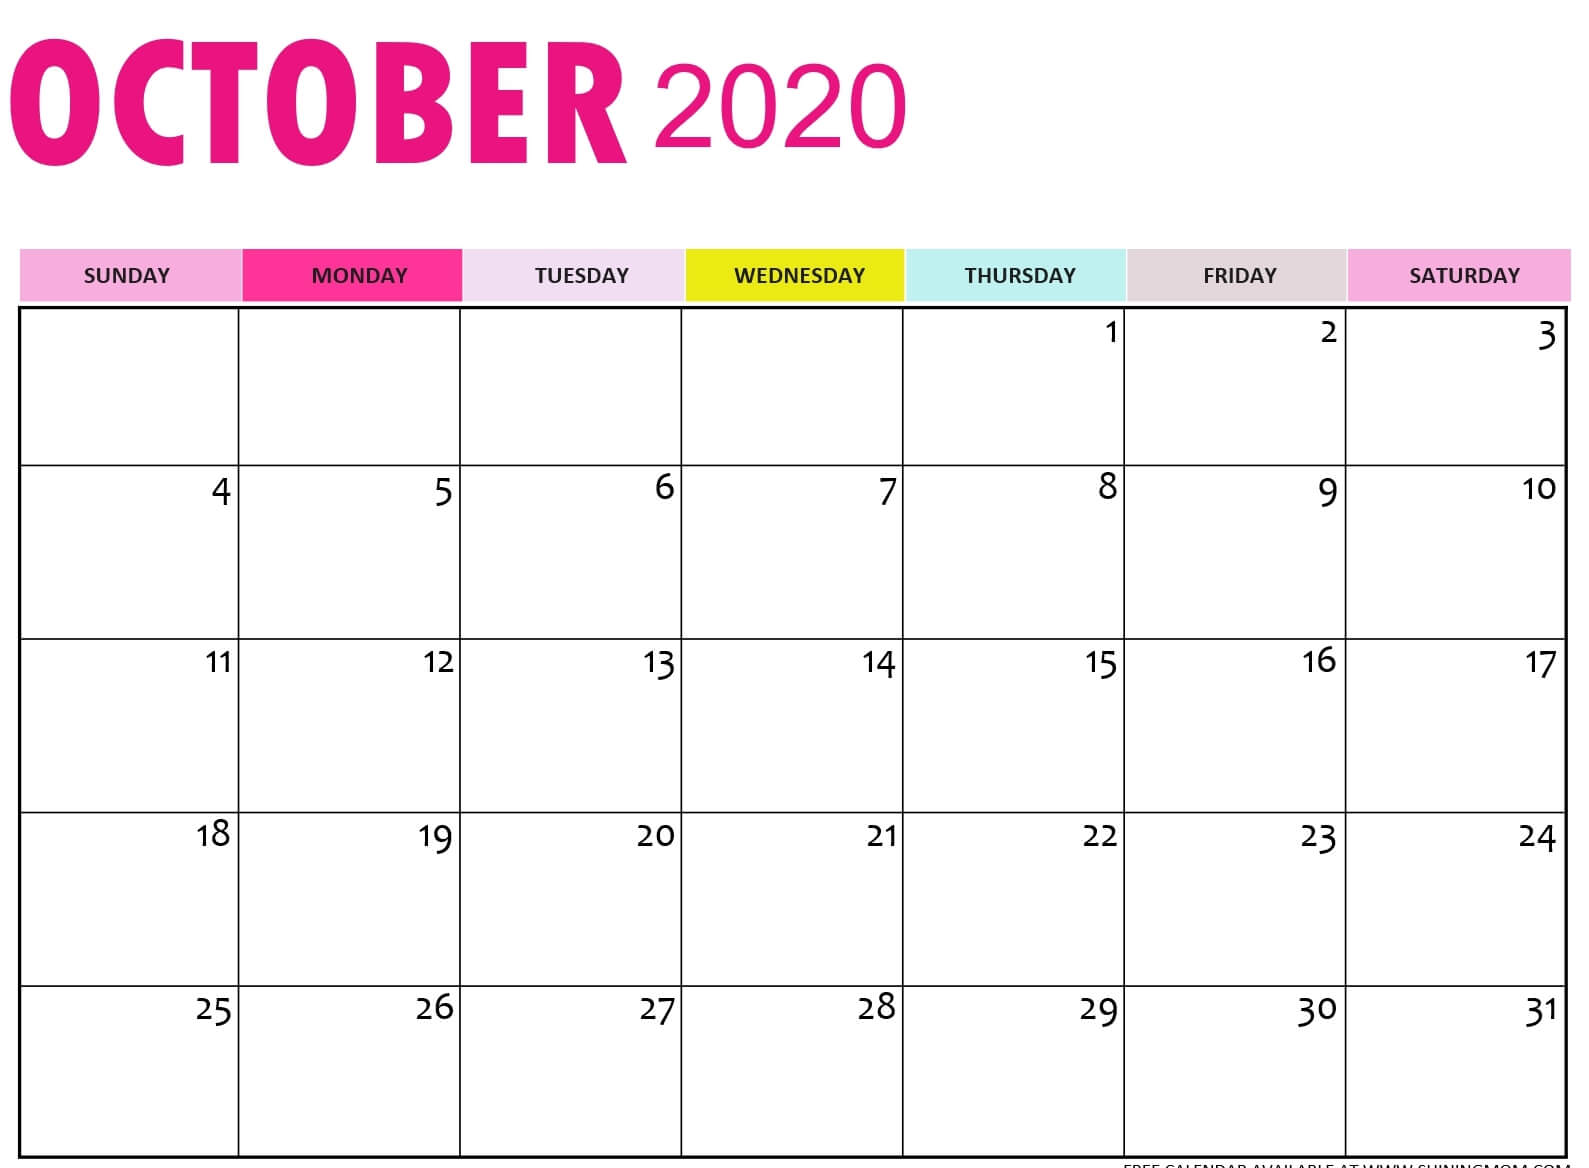 October 2020 Calendar Page